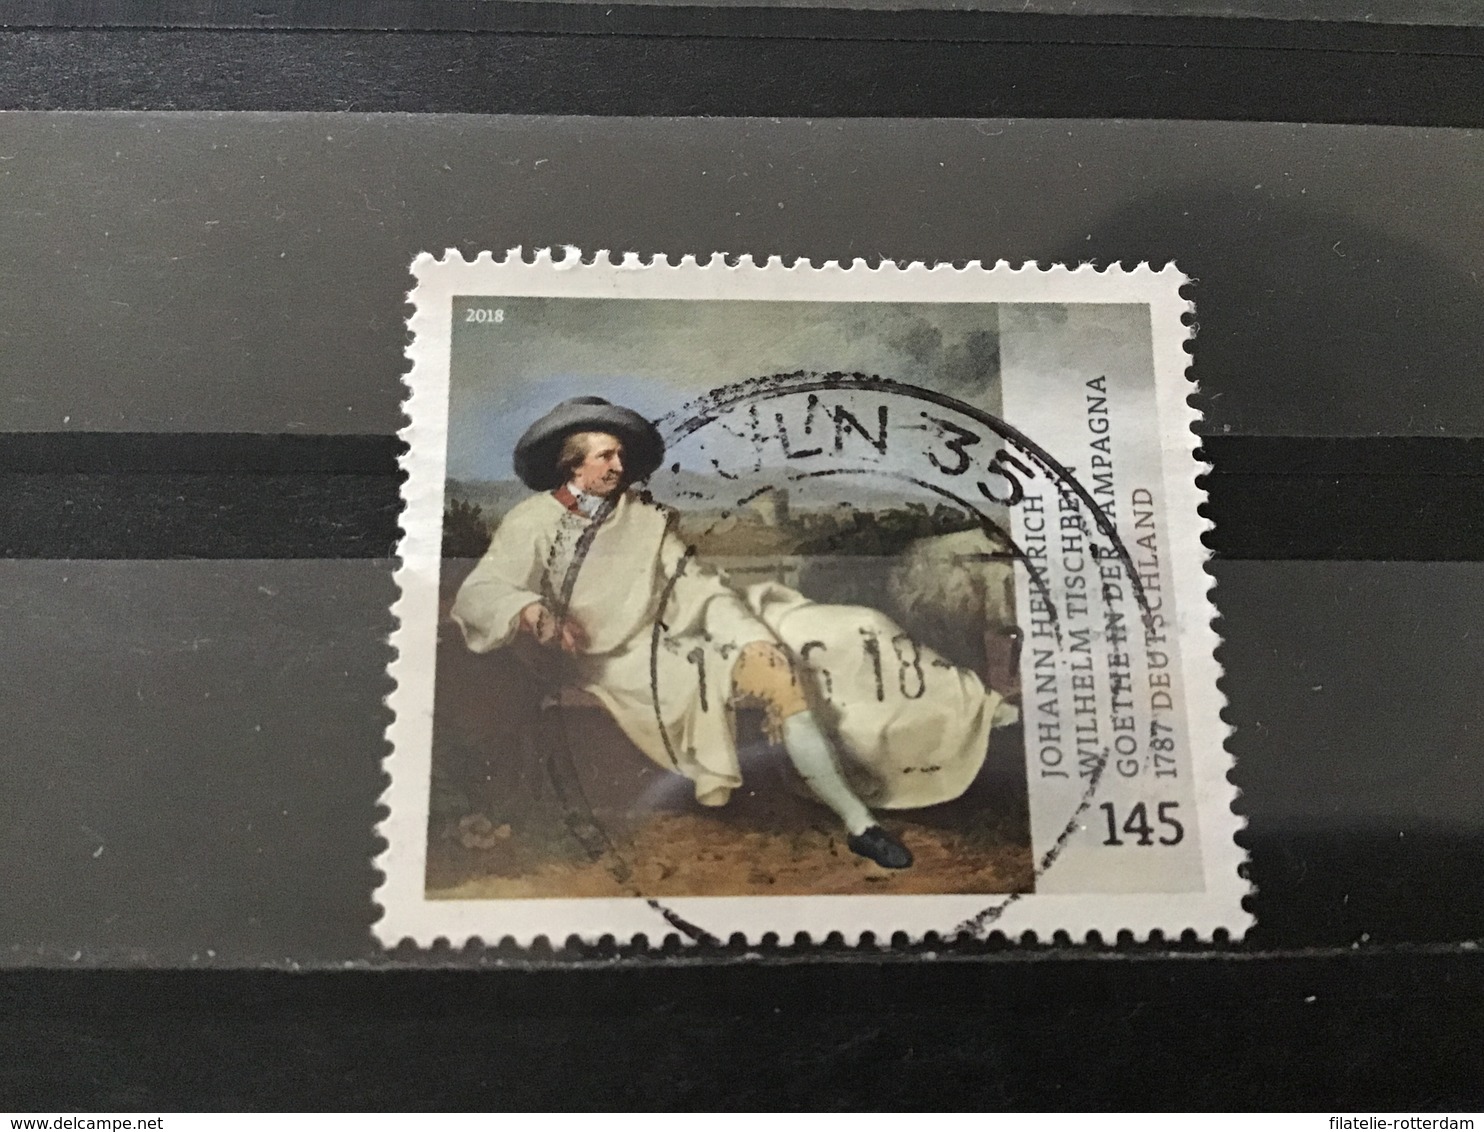 Duitsland / Germany - Schilderijen (145) 2018 - Used Stamps